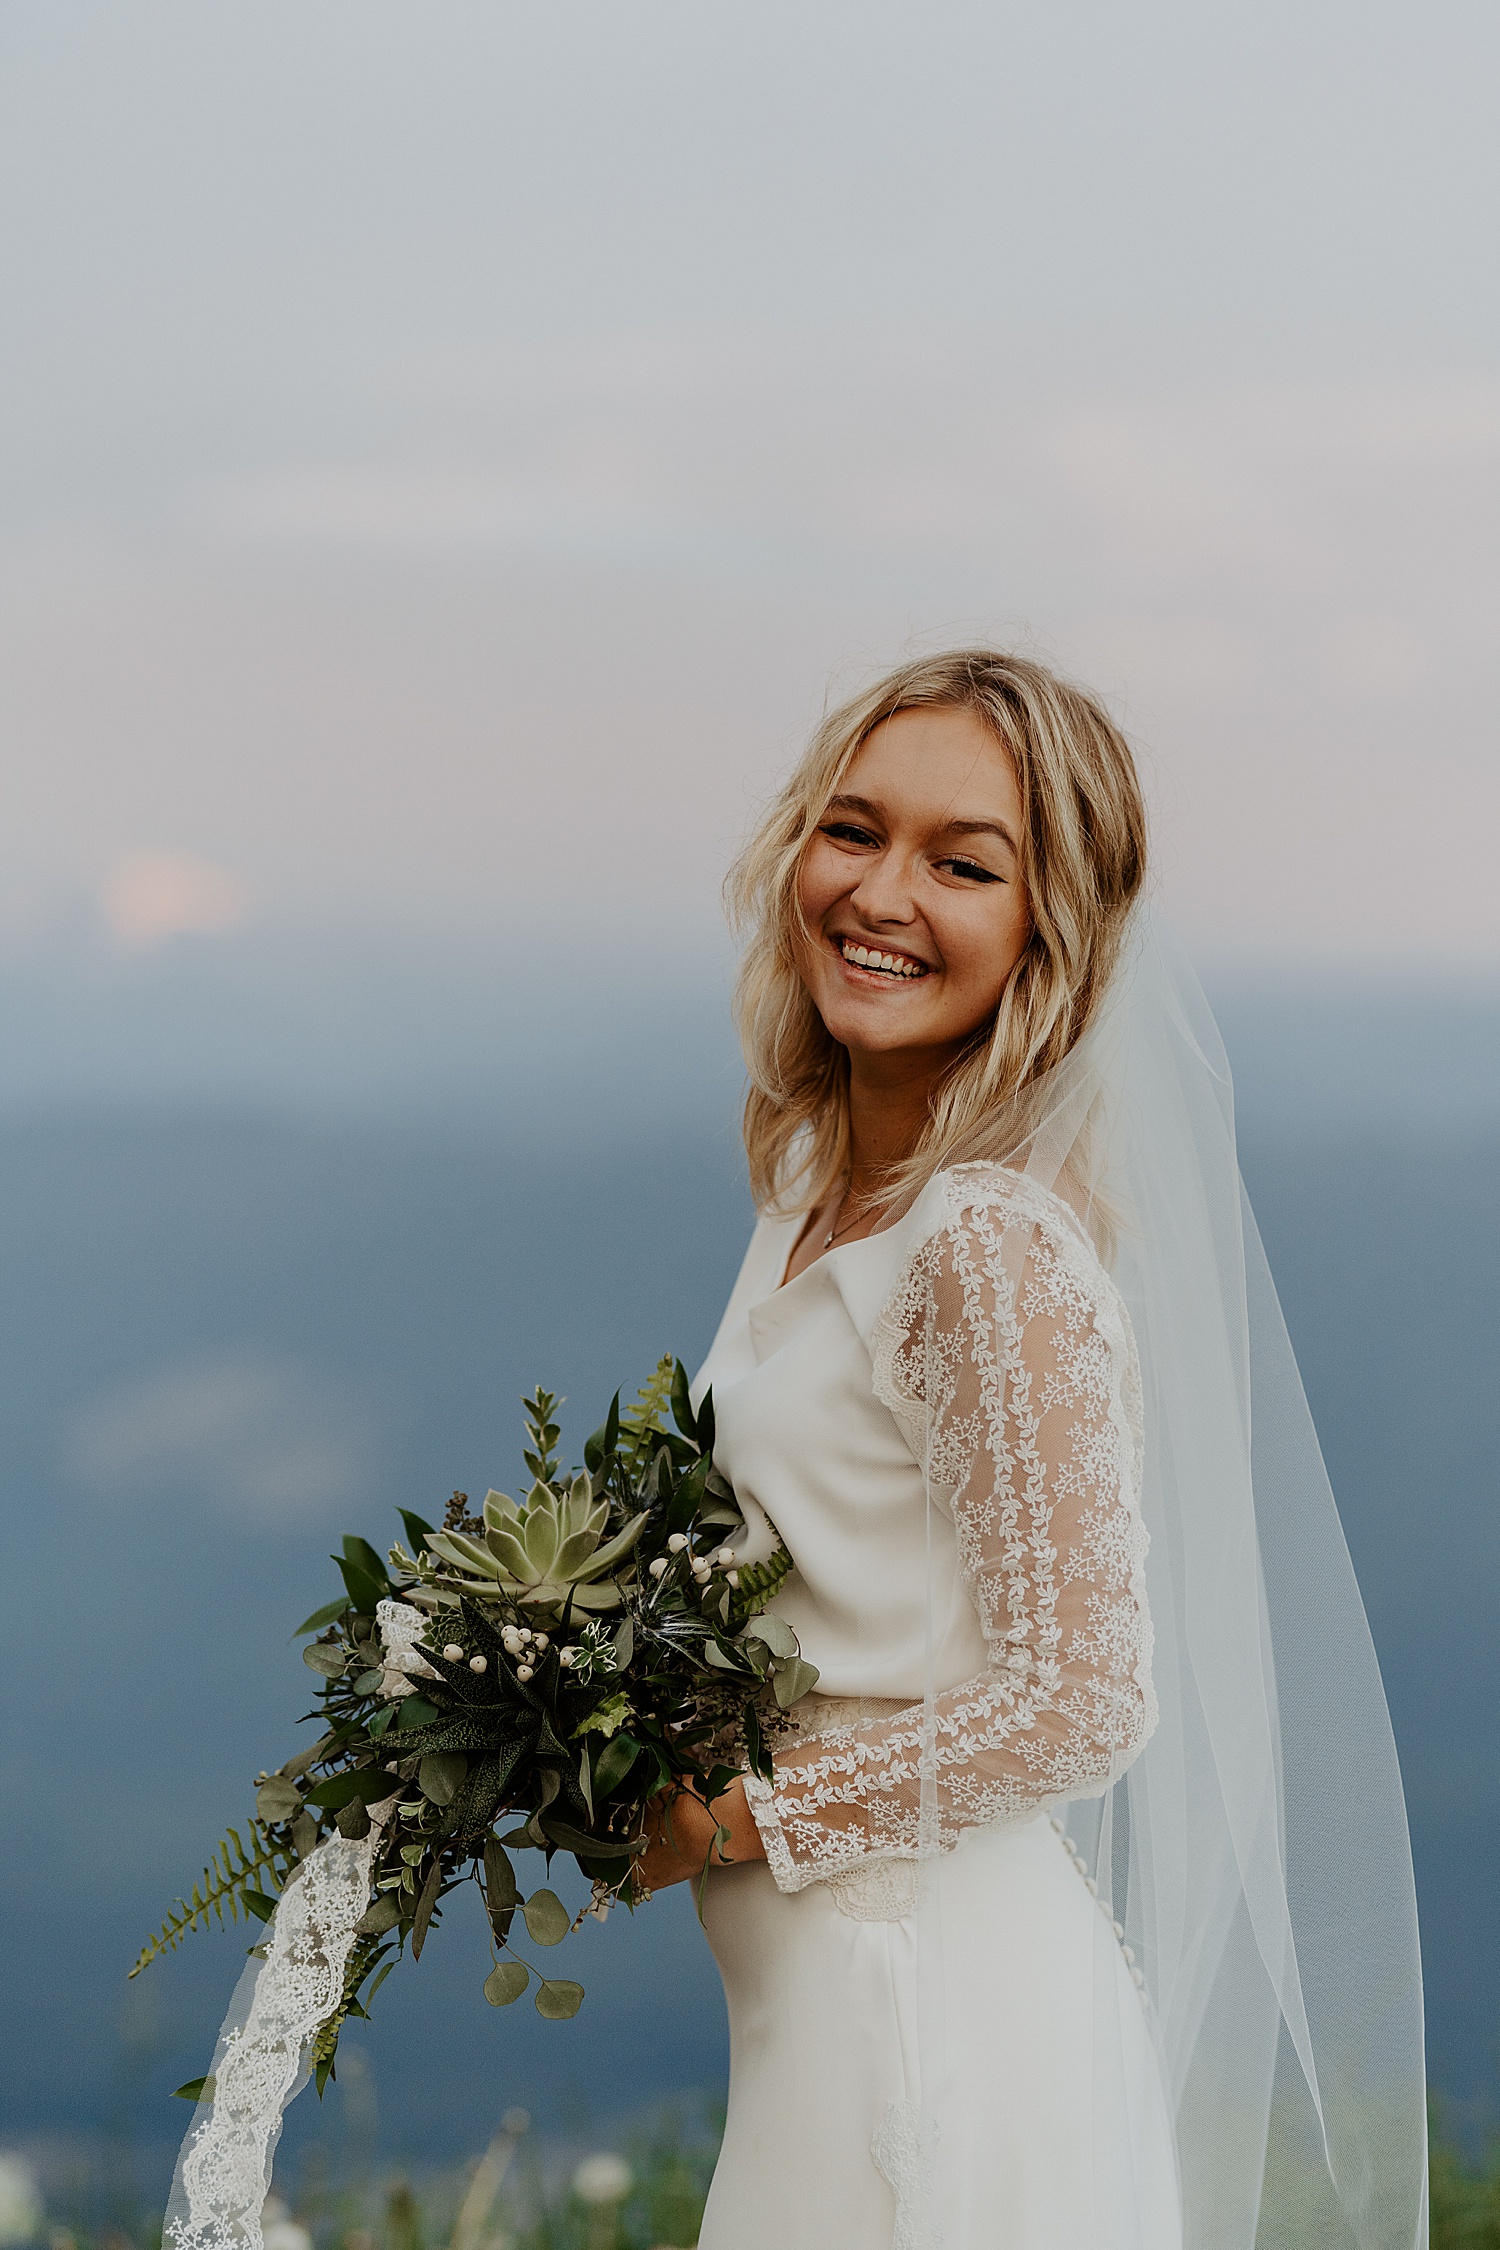 Sunrise portrait of a bride in a long sleeve dress